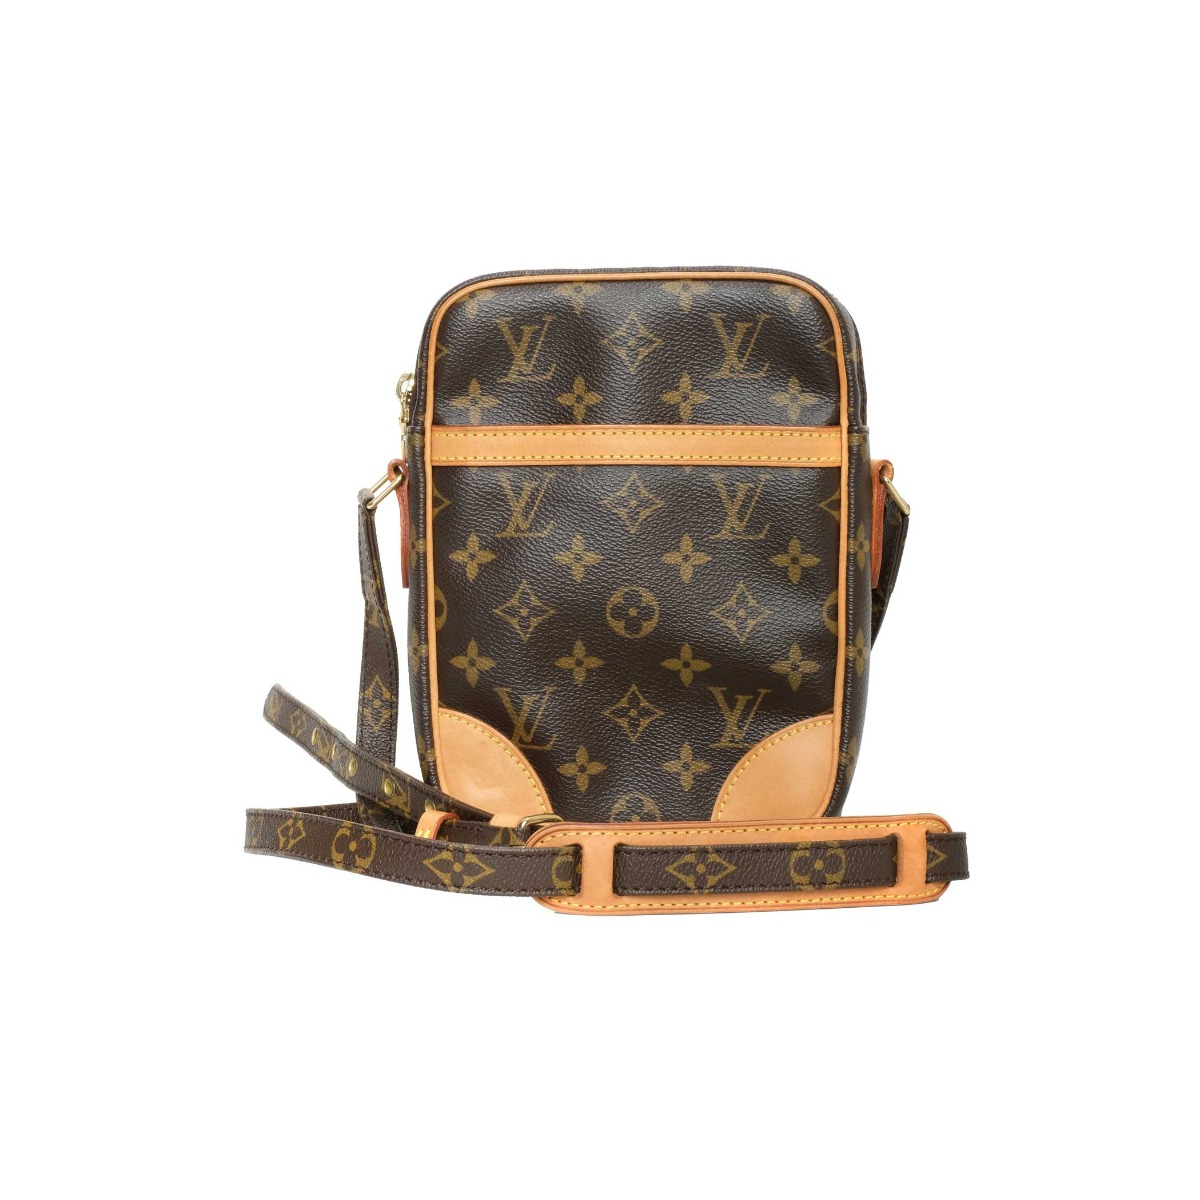 Louis Vuitton Monogram Amazon bag | eBay